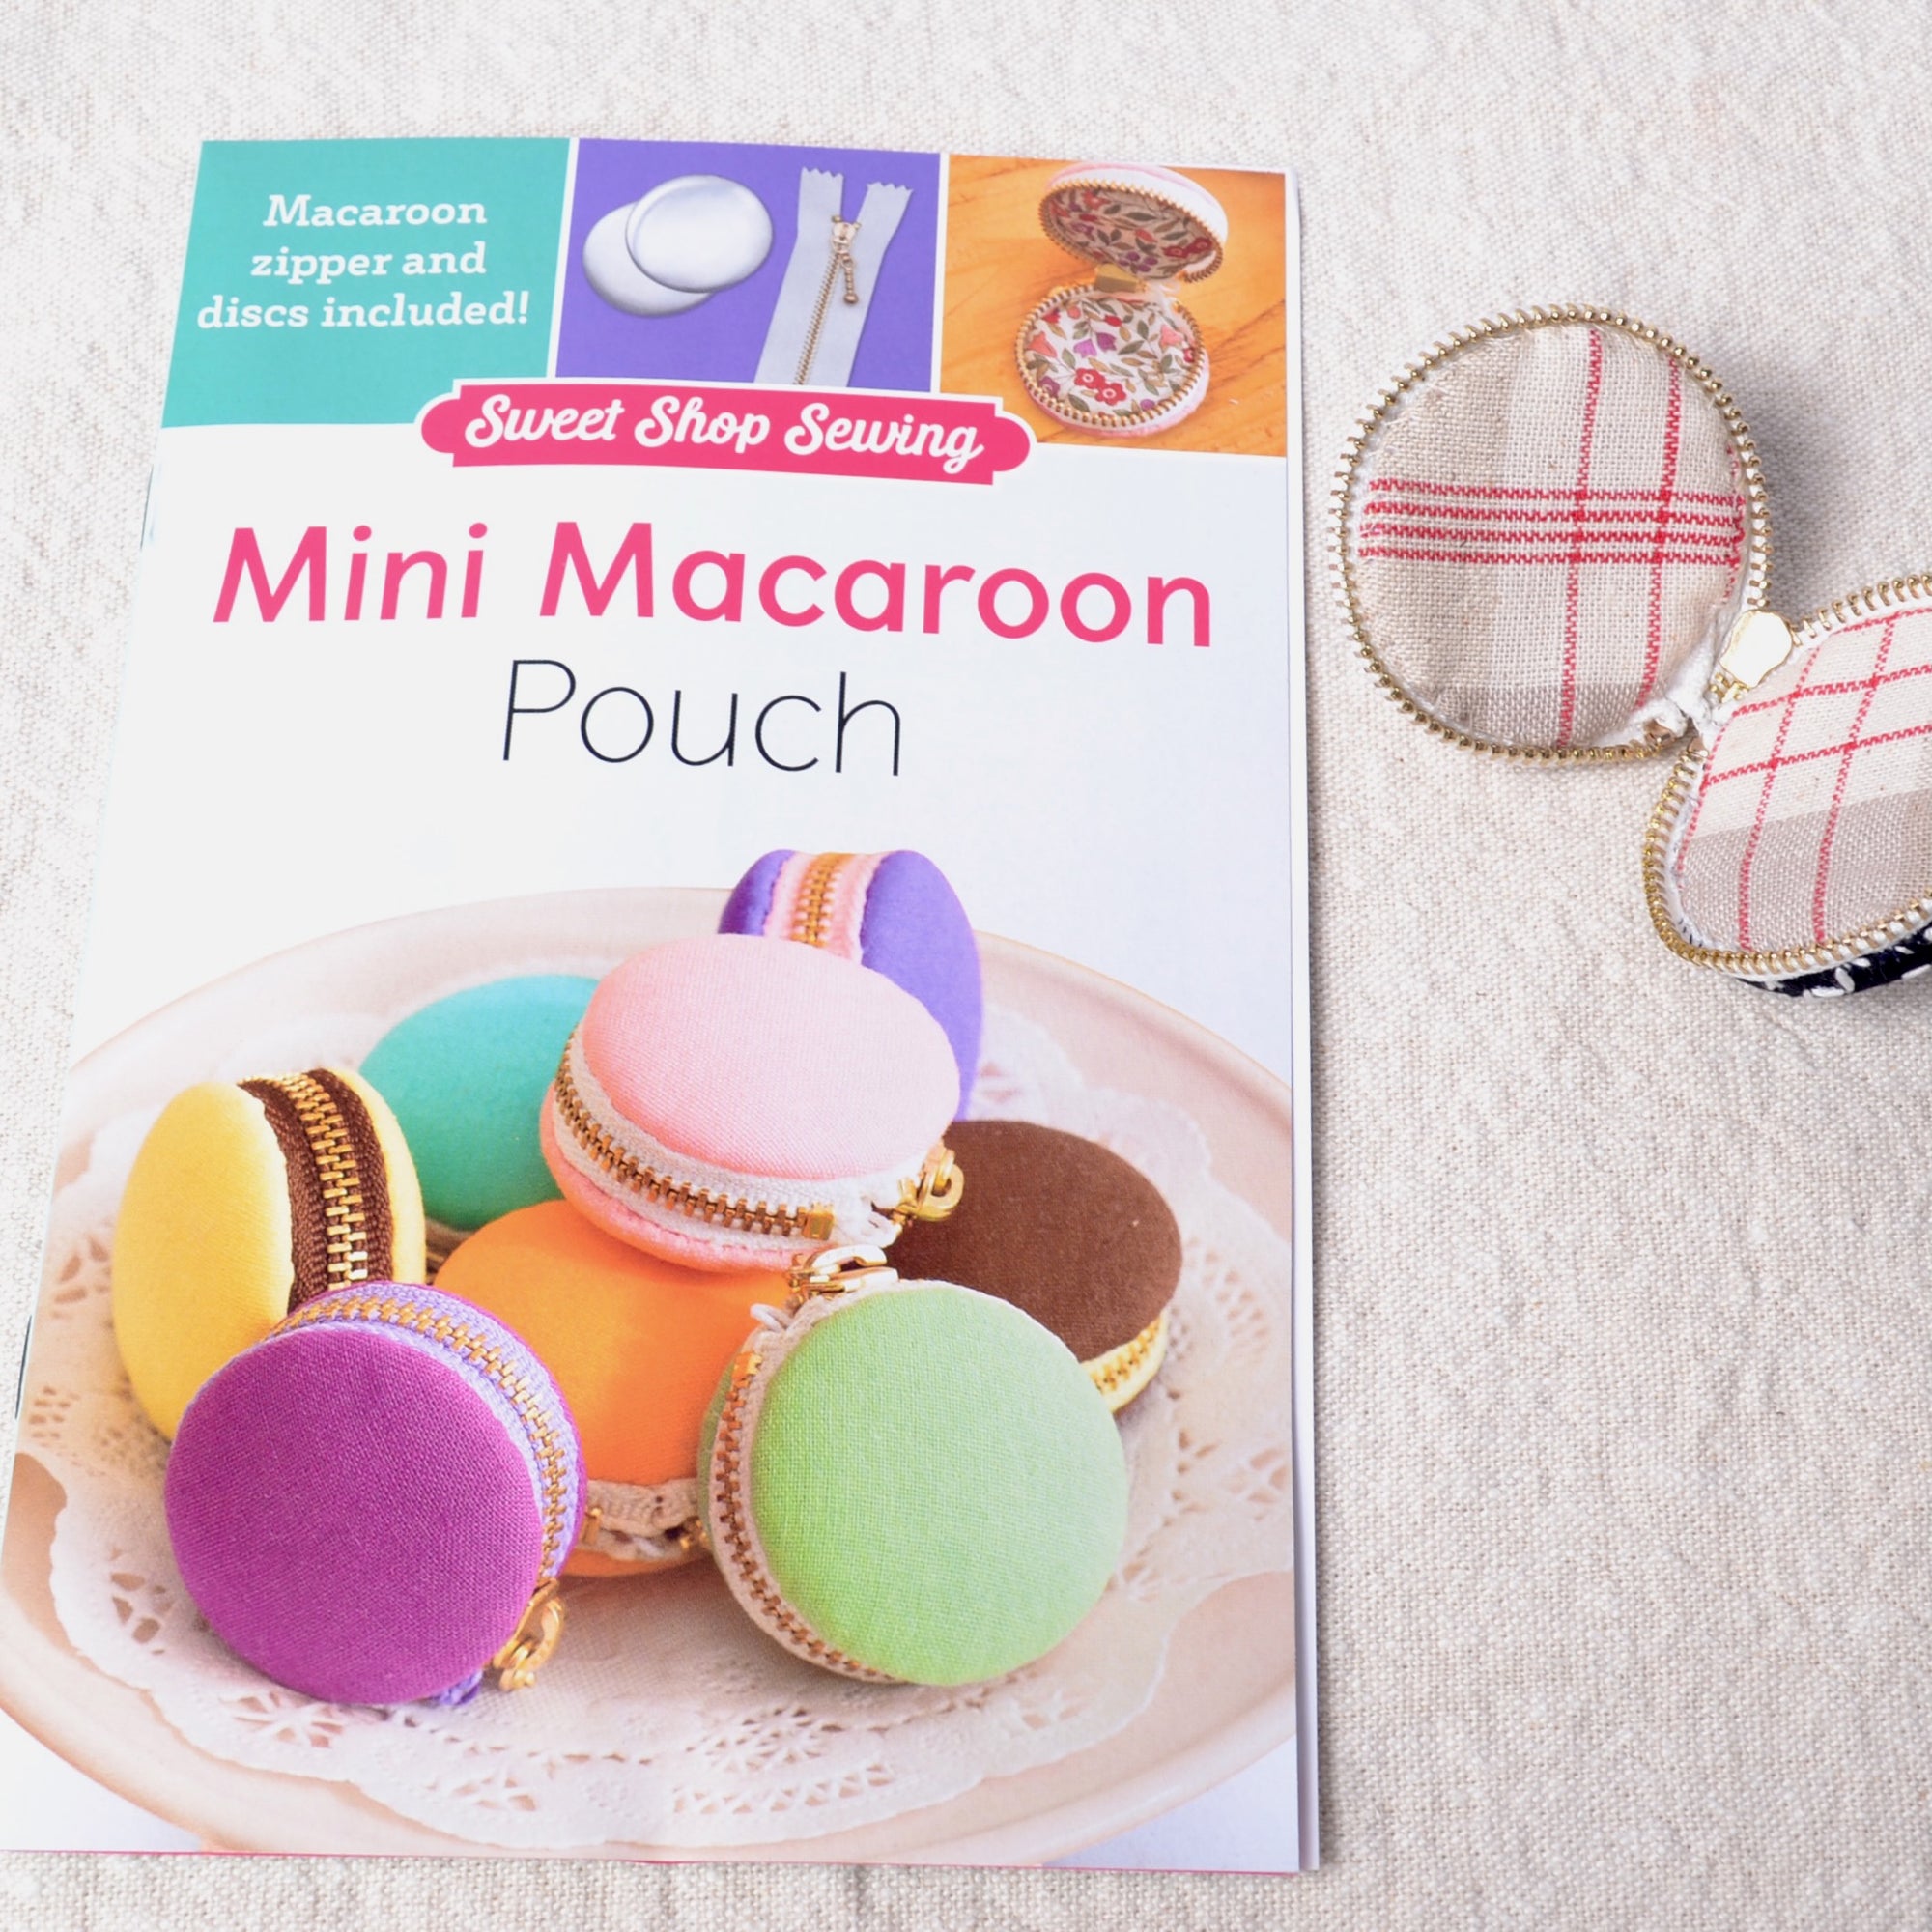 Mini Macaroon purse pattern and kit